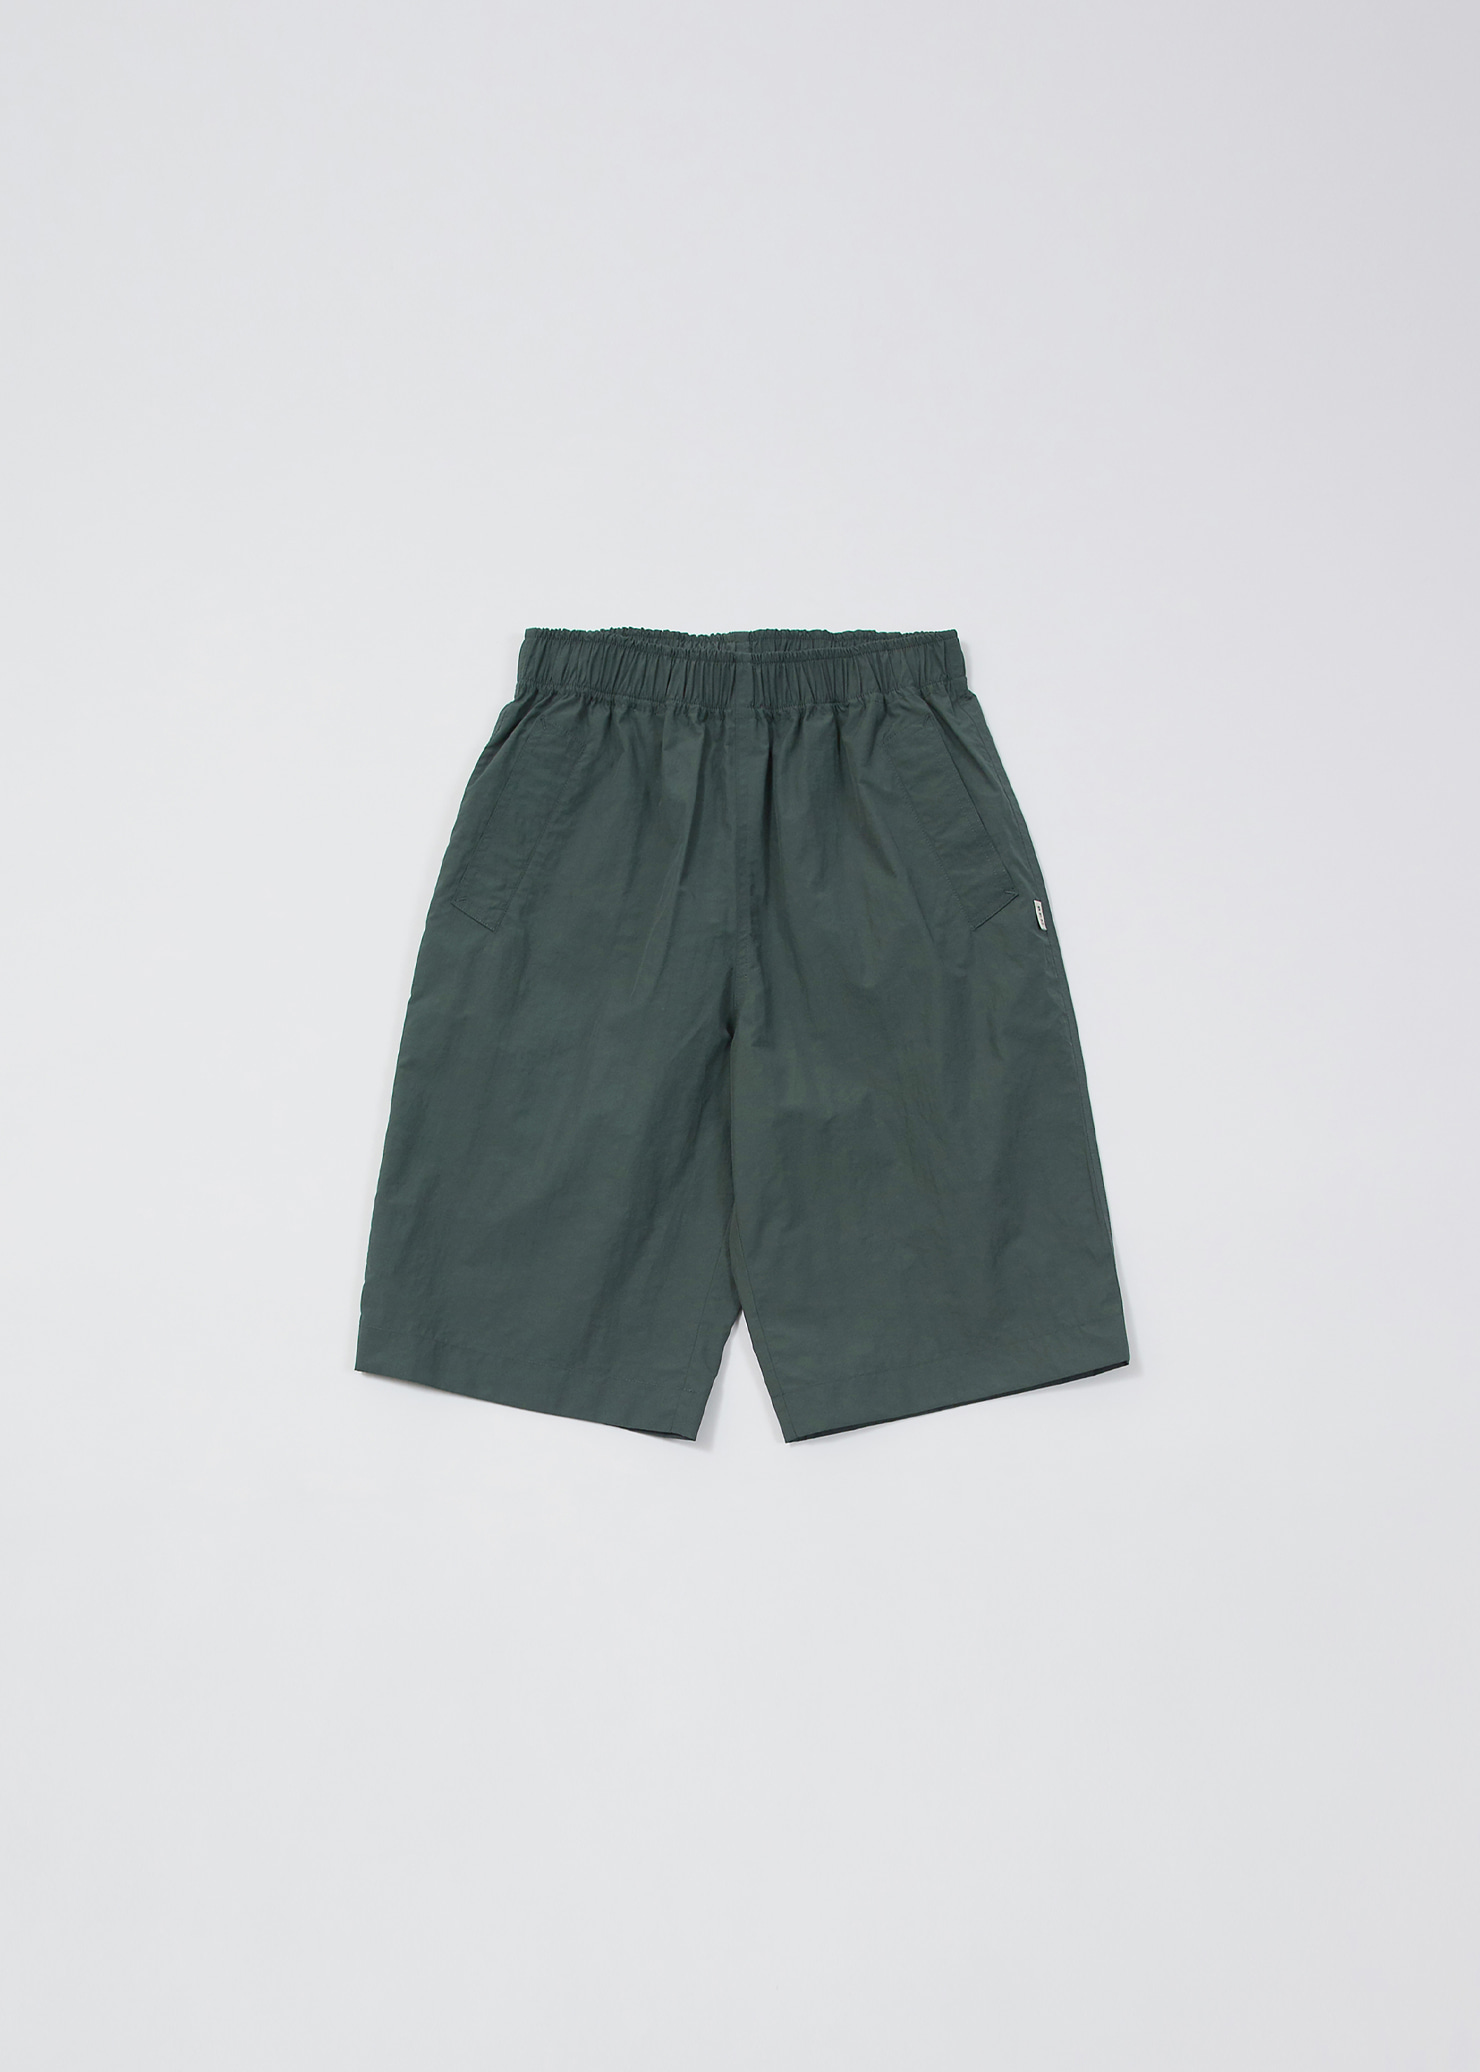 Field Pocket Half Pants _ Teal Green